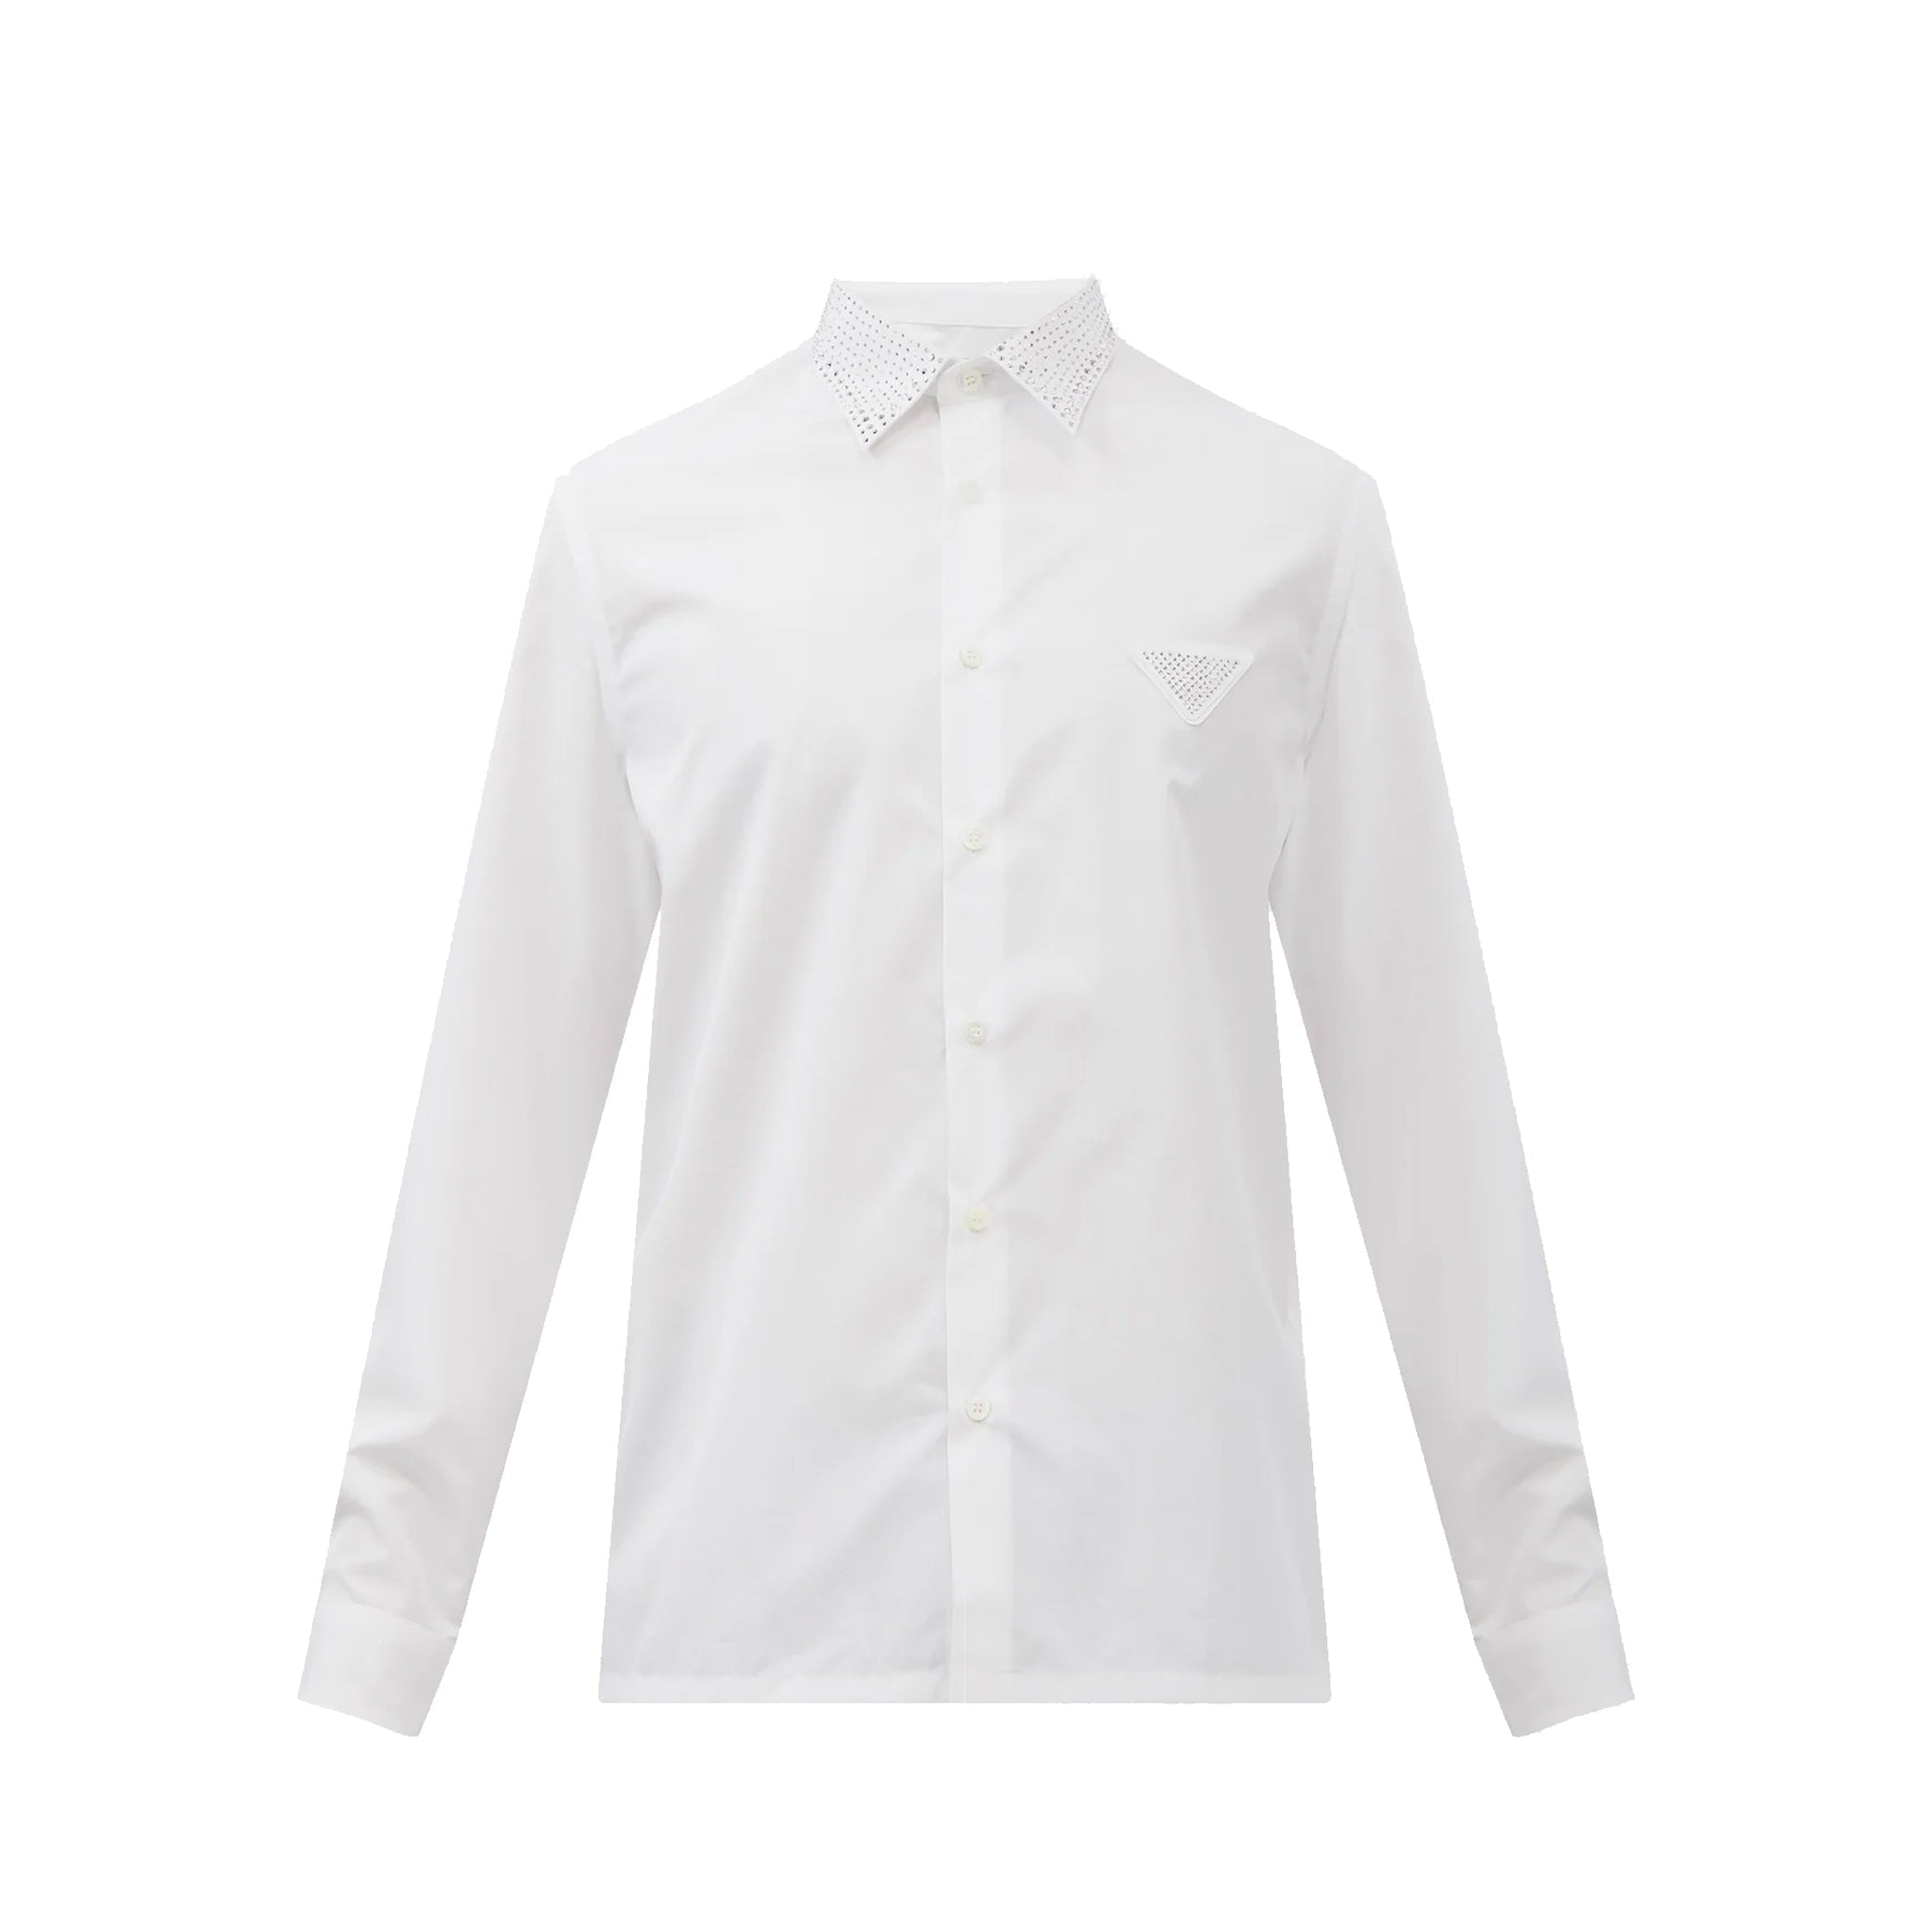 PRADA-Outlet-Sale-Prada Studded Crystal Collar Shirt-MEN CLOTHING-ARCHIVIST